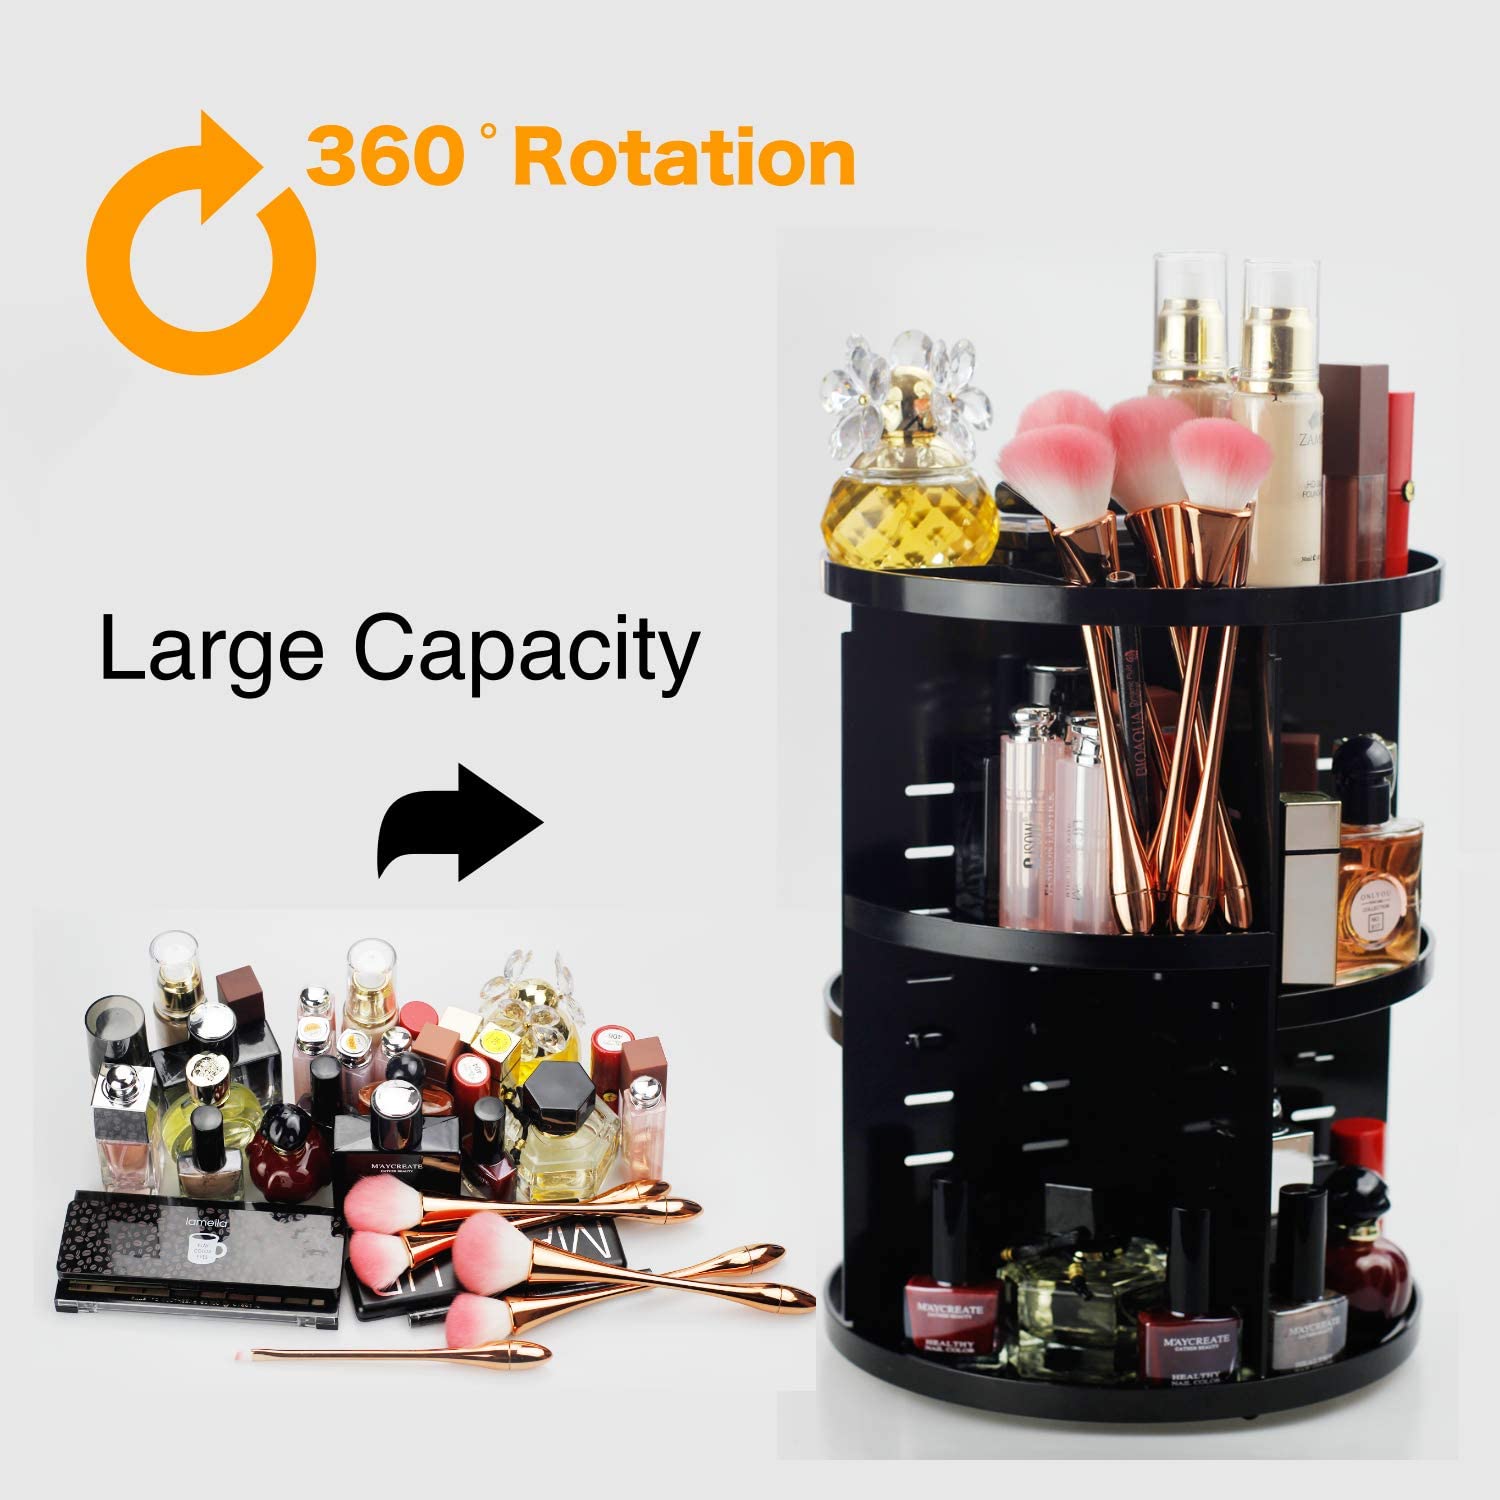 Rotating Adjustable 360 Degree Makeup Organizer, Large Capacity Makeup Caddy Shelf, Fit Lipsticks, Cream, Brushes, Jewerlry, Countertop Shelf